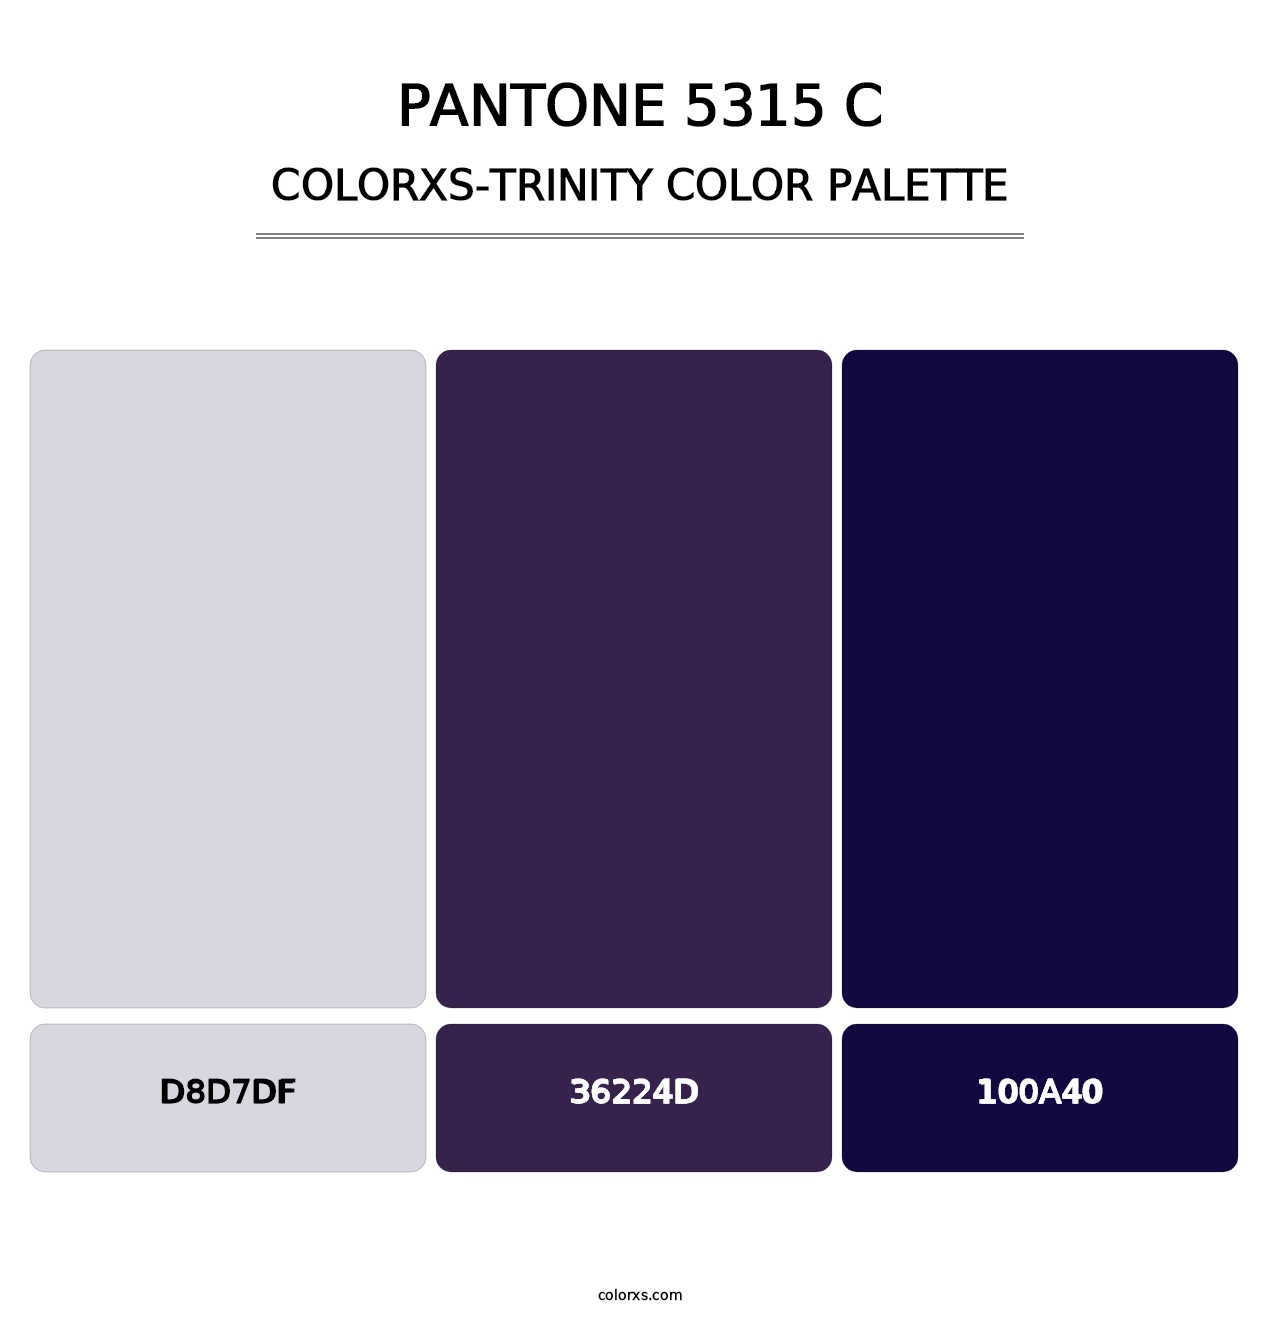 PANTONE 5315 C - Colorxs Trinity Palette